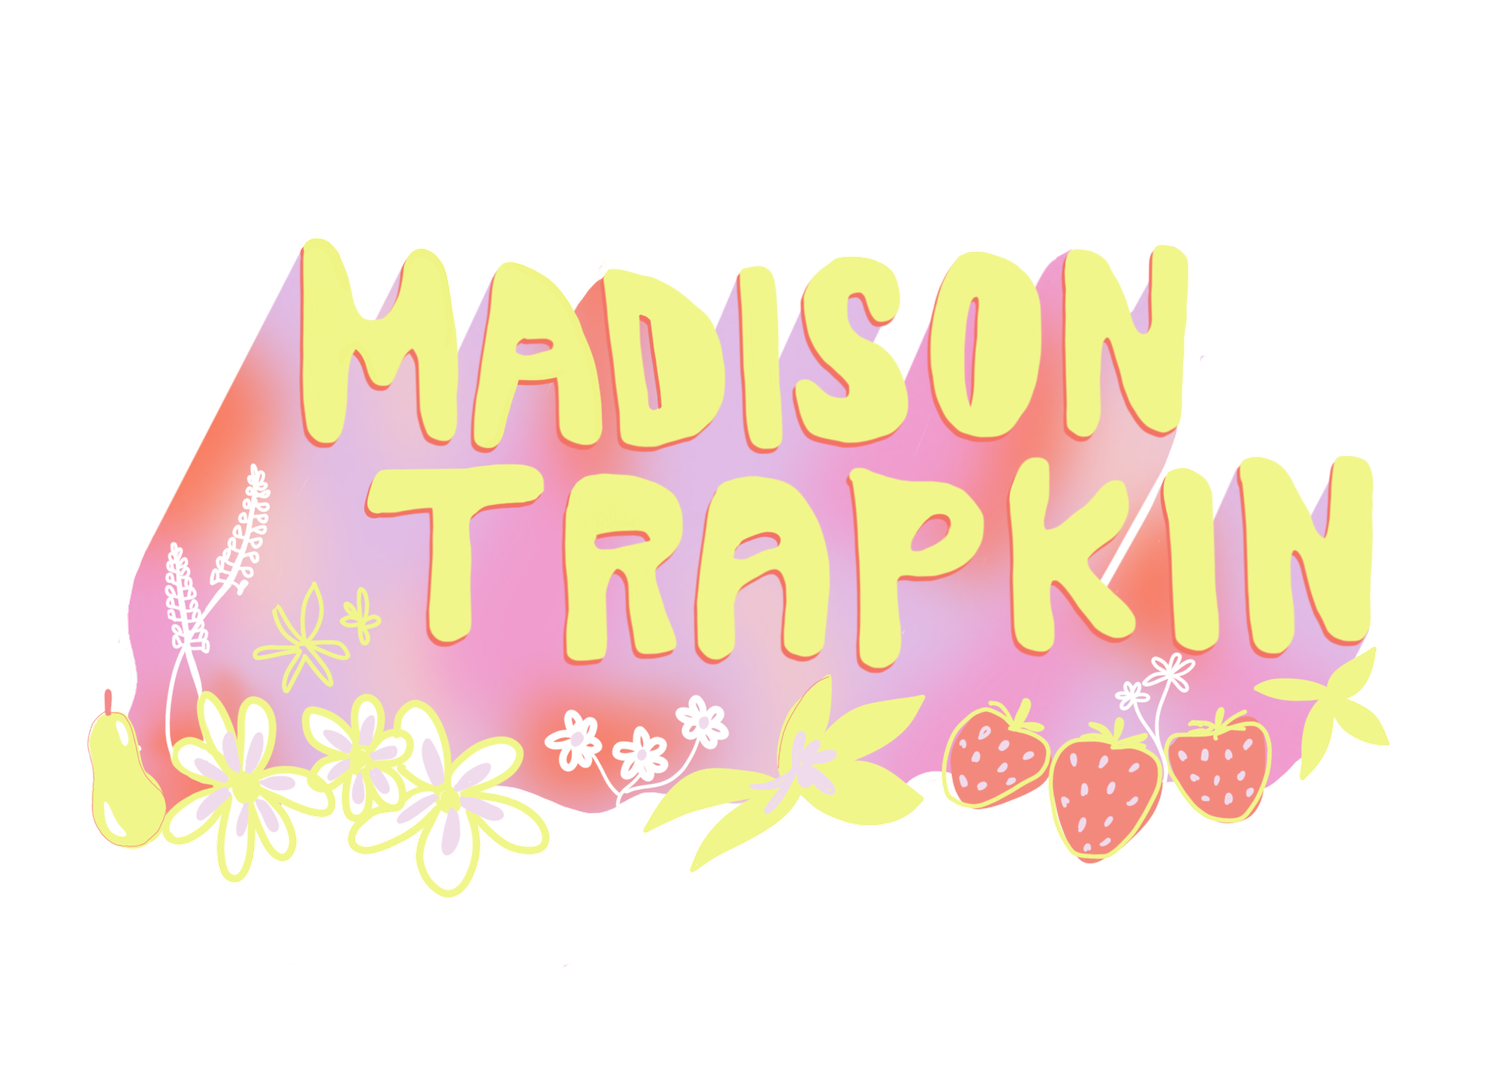 Madison Trapkin